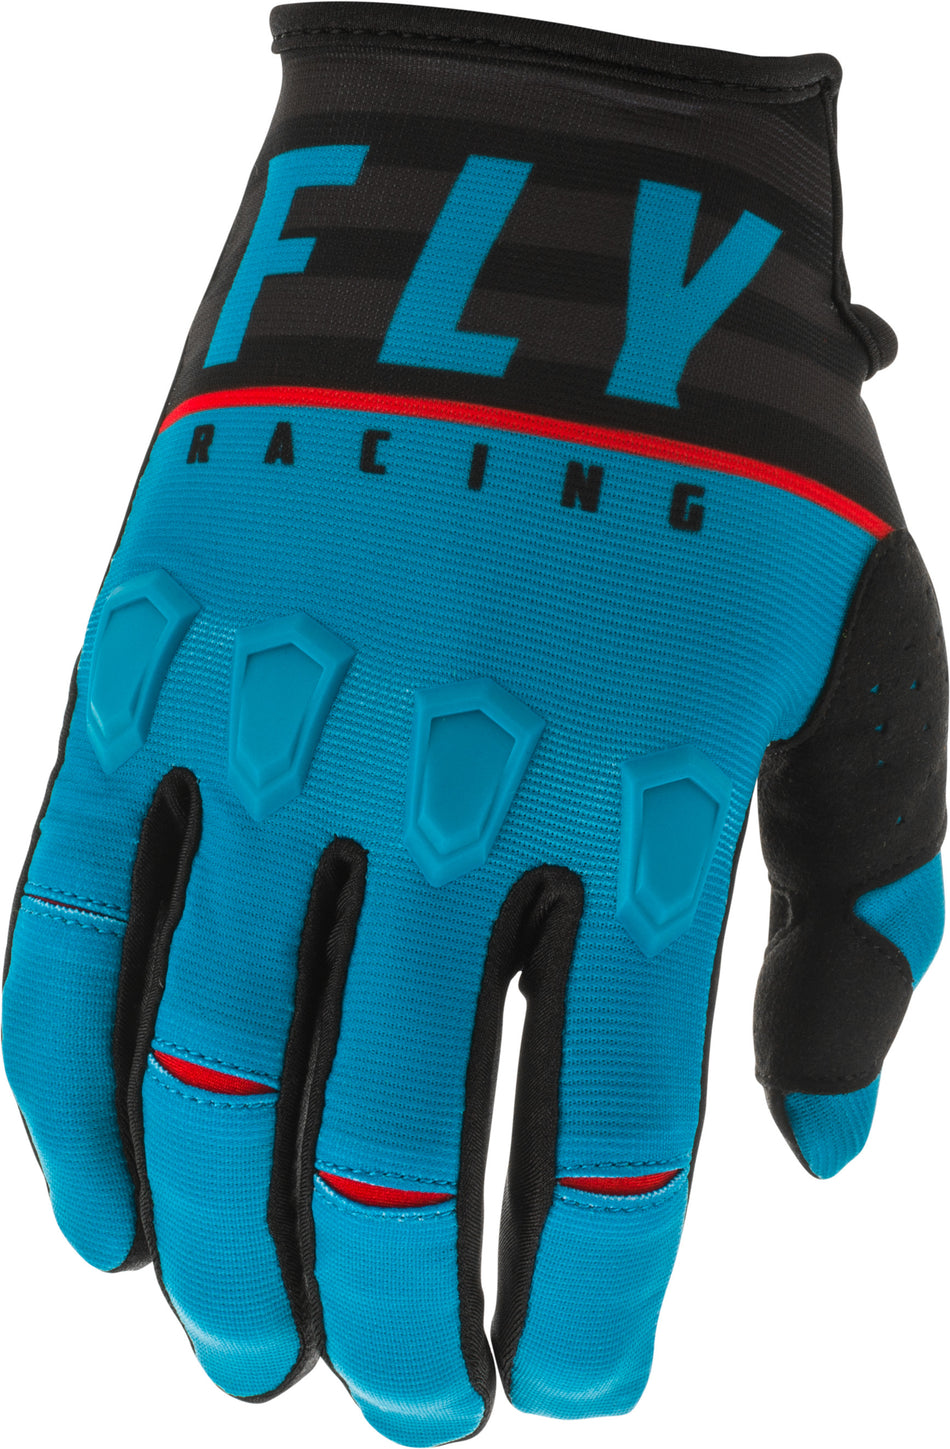 FLY RACING Kinetic K120 Gloves Blue/Black/Red Sz 05 373-41905